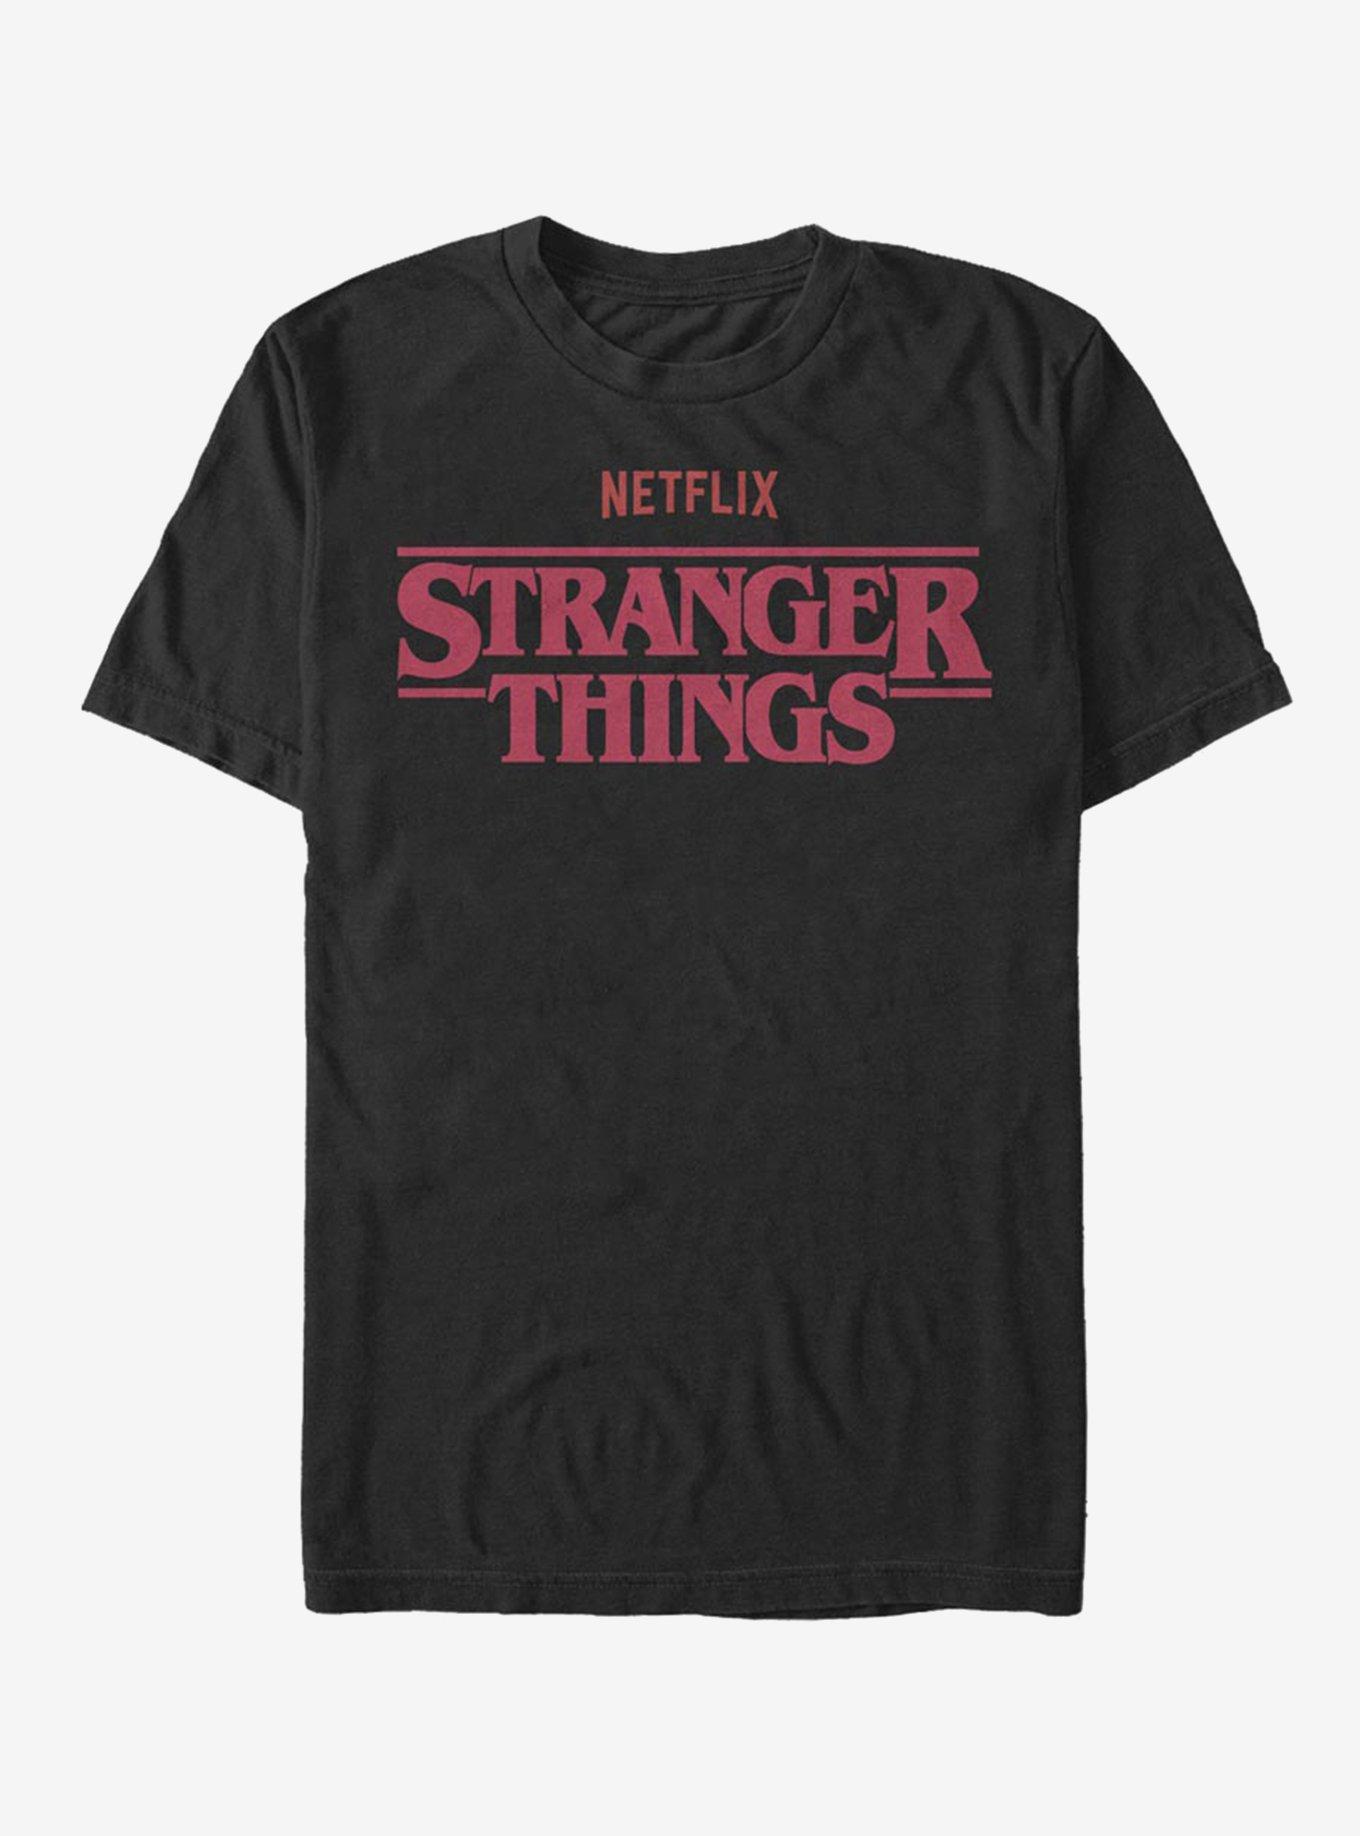 Stranger Things Netflix Logo T-Shirt